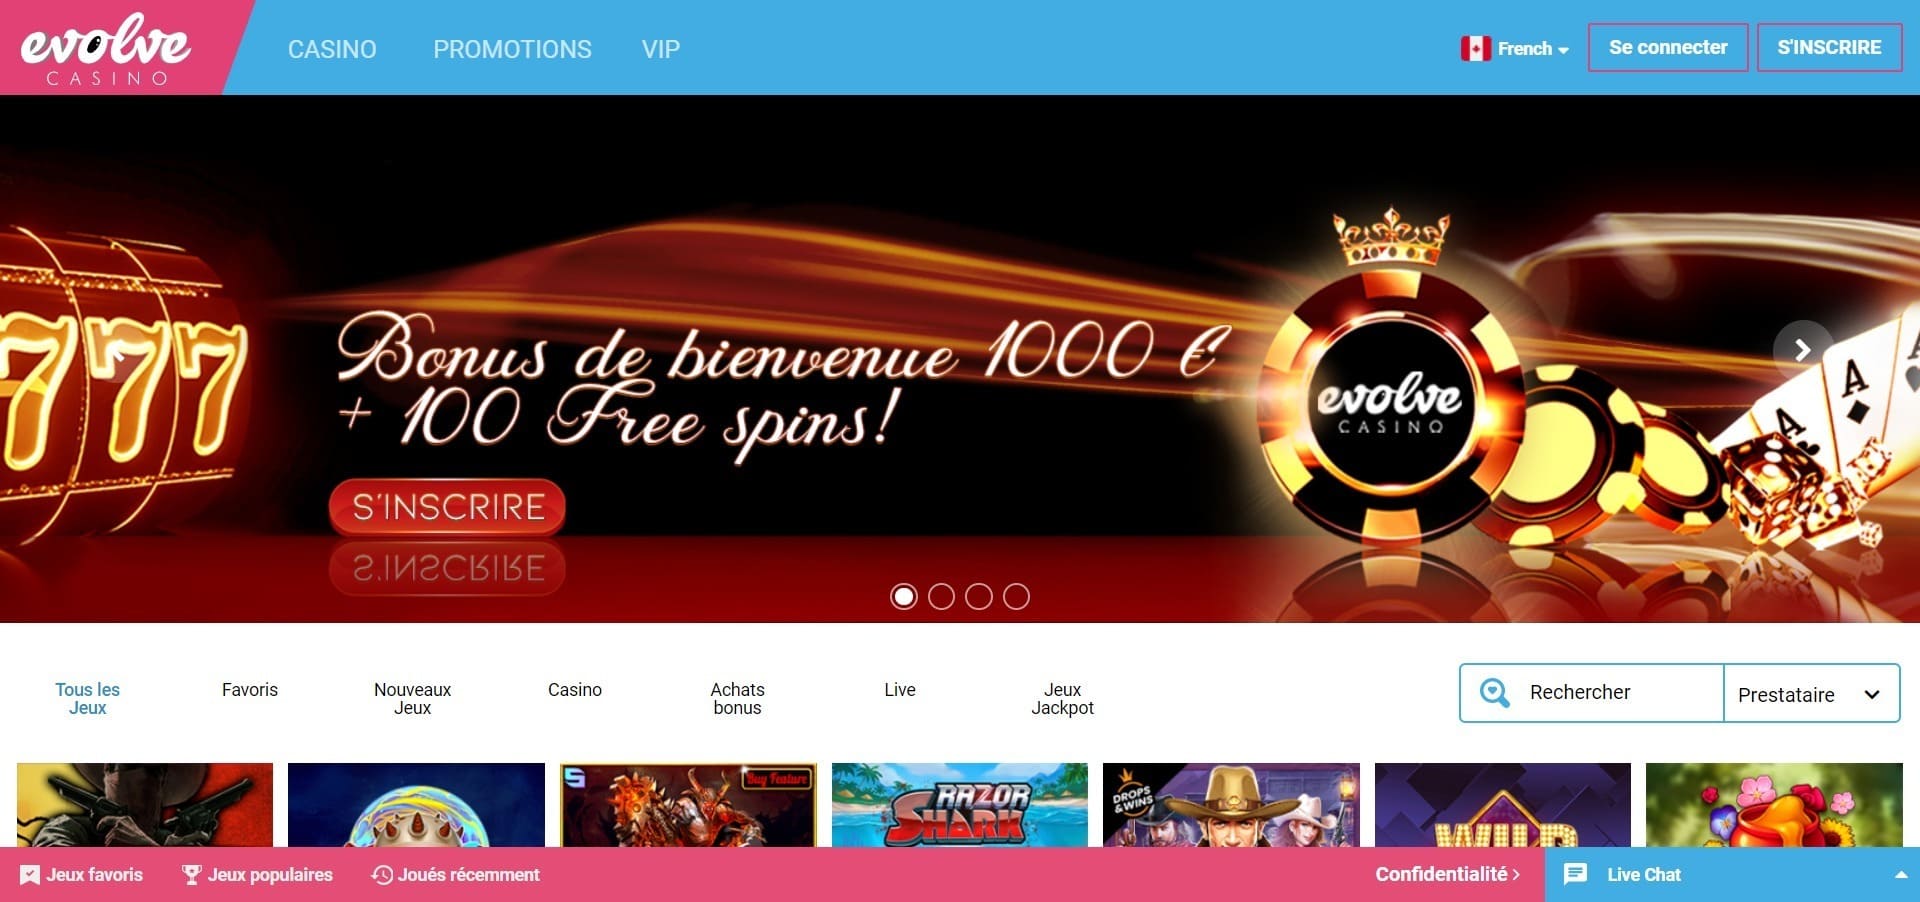 Site officiel de Evolve Casino